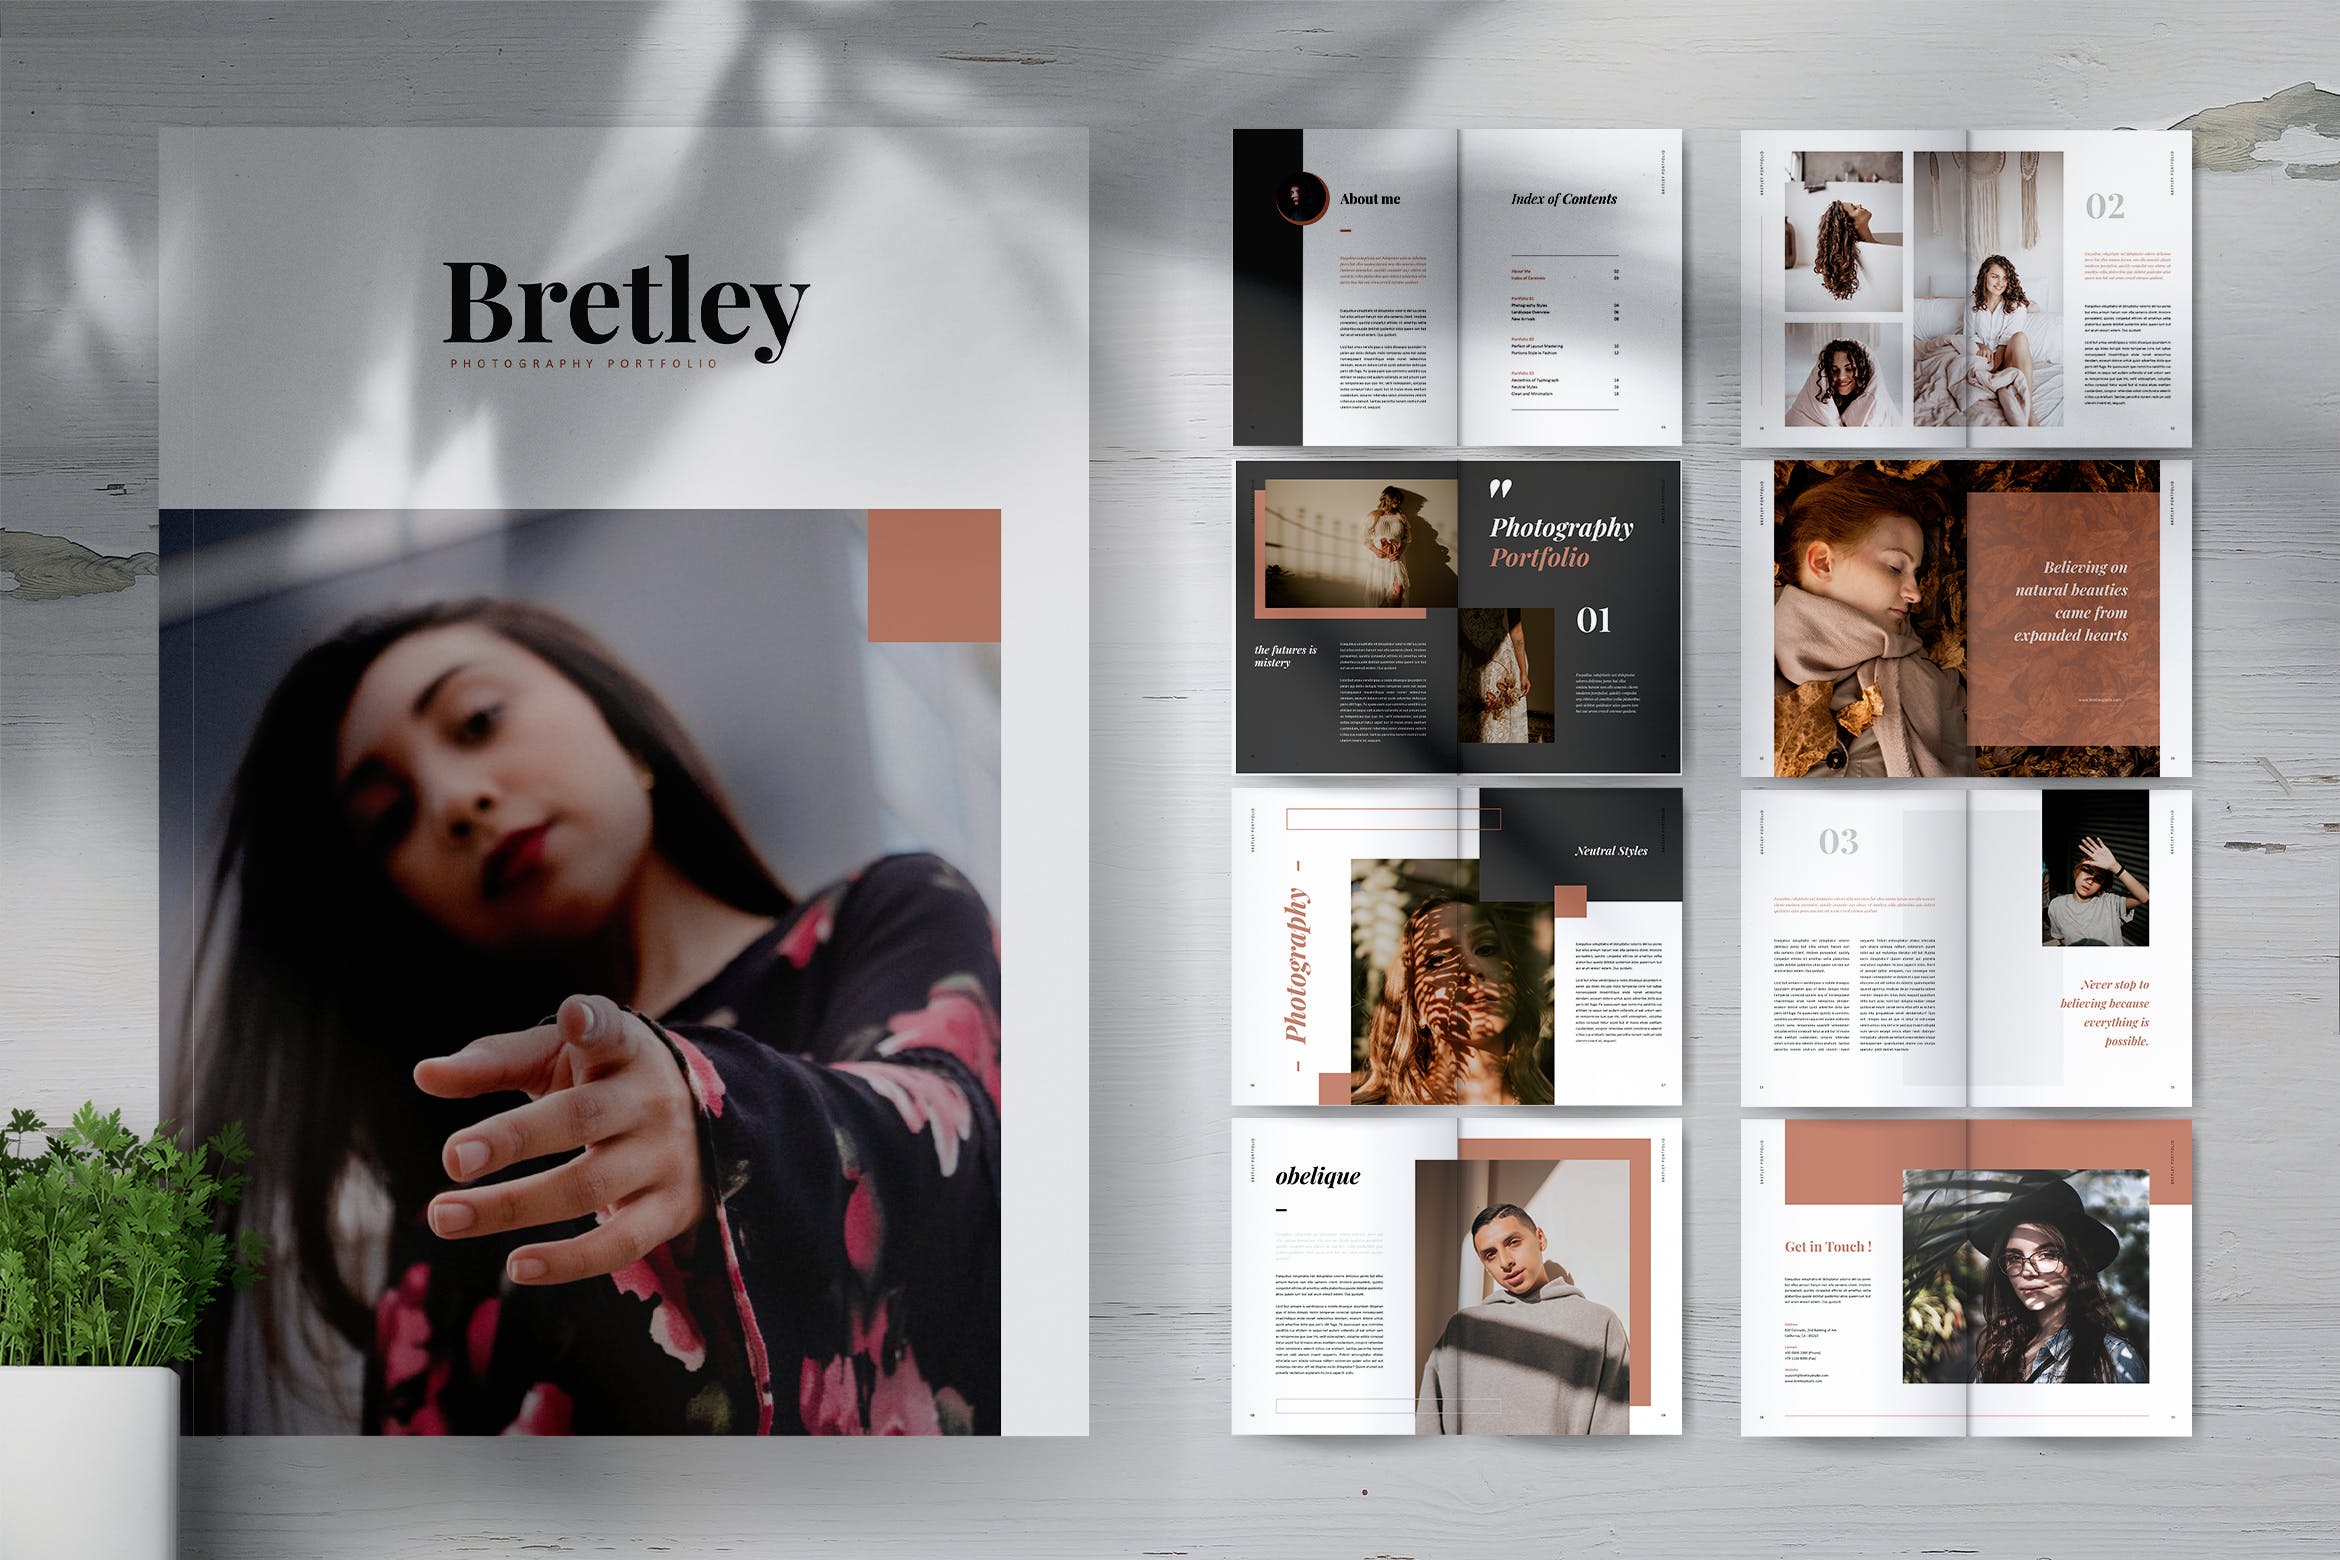 创意摄影作品集/照片画册设计模板 BRETLEY Creative Photography Portfolio Brochures插图